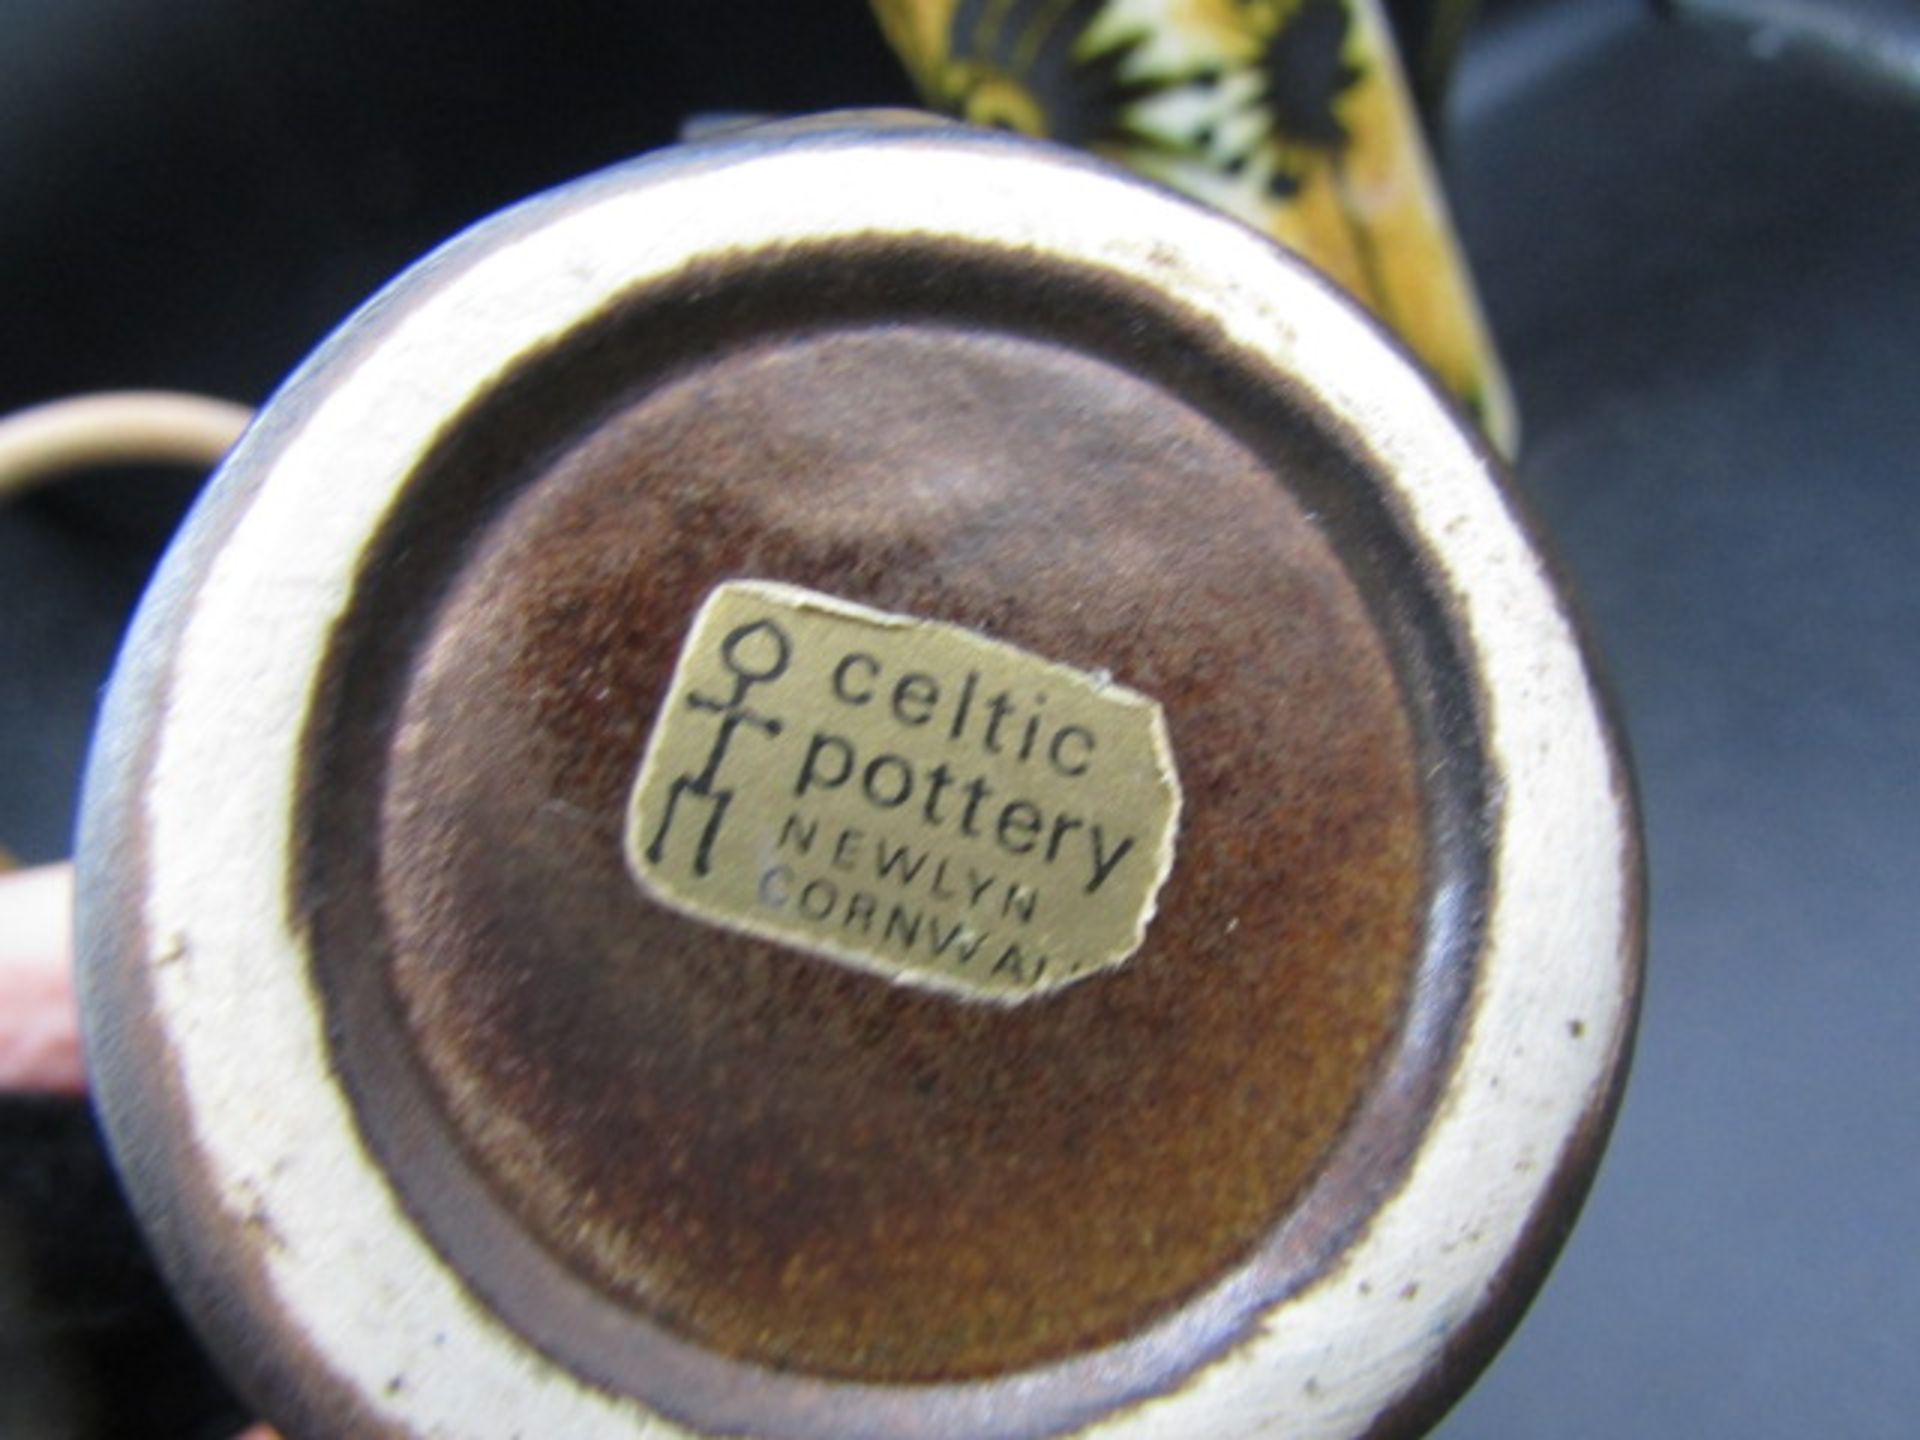 Celtic pottery Newlyn vases, mug, coffee pot and tea pot - Image 5 of 8